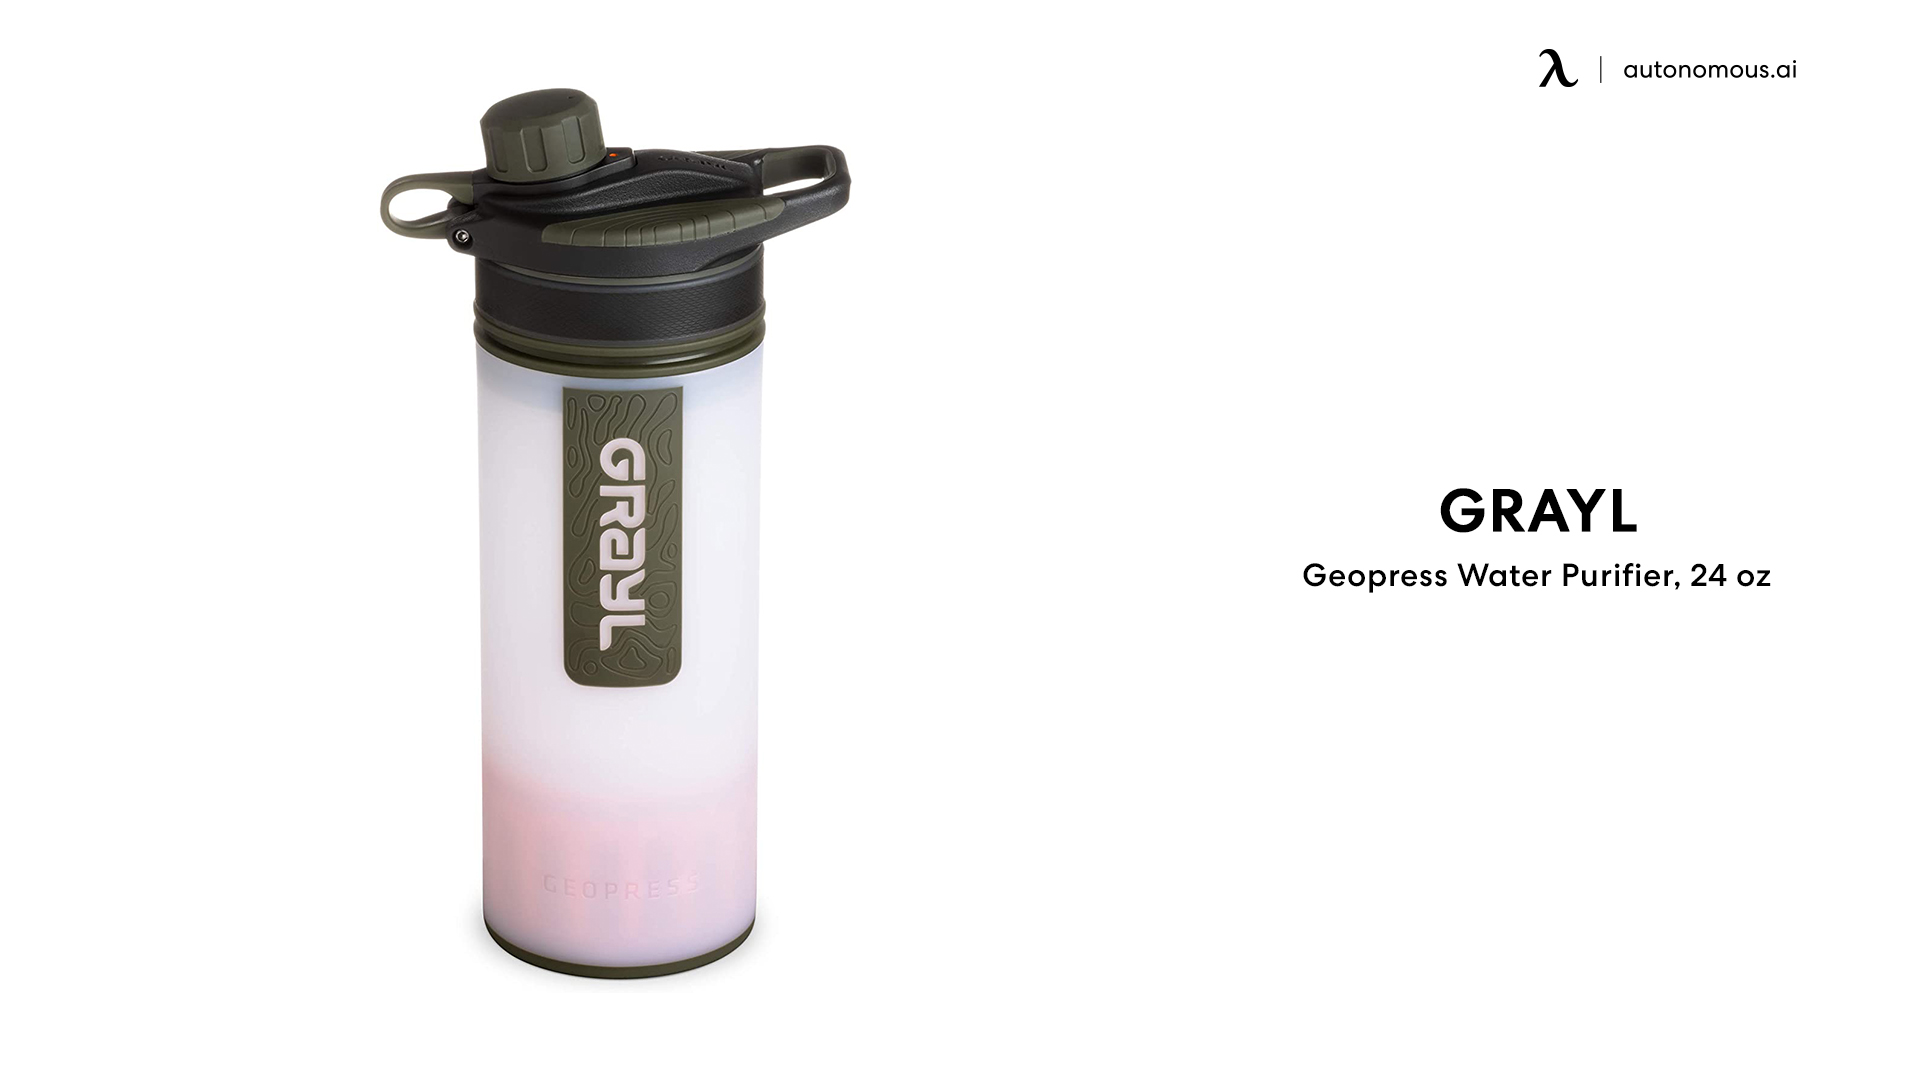 GRAYL Geopress Water Purifier, 24 oz